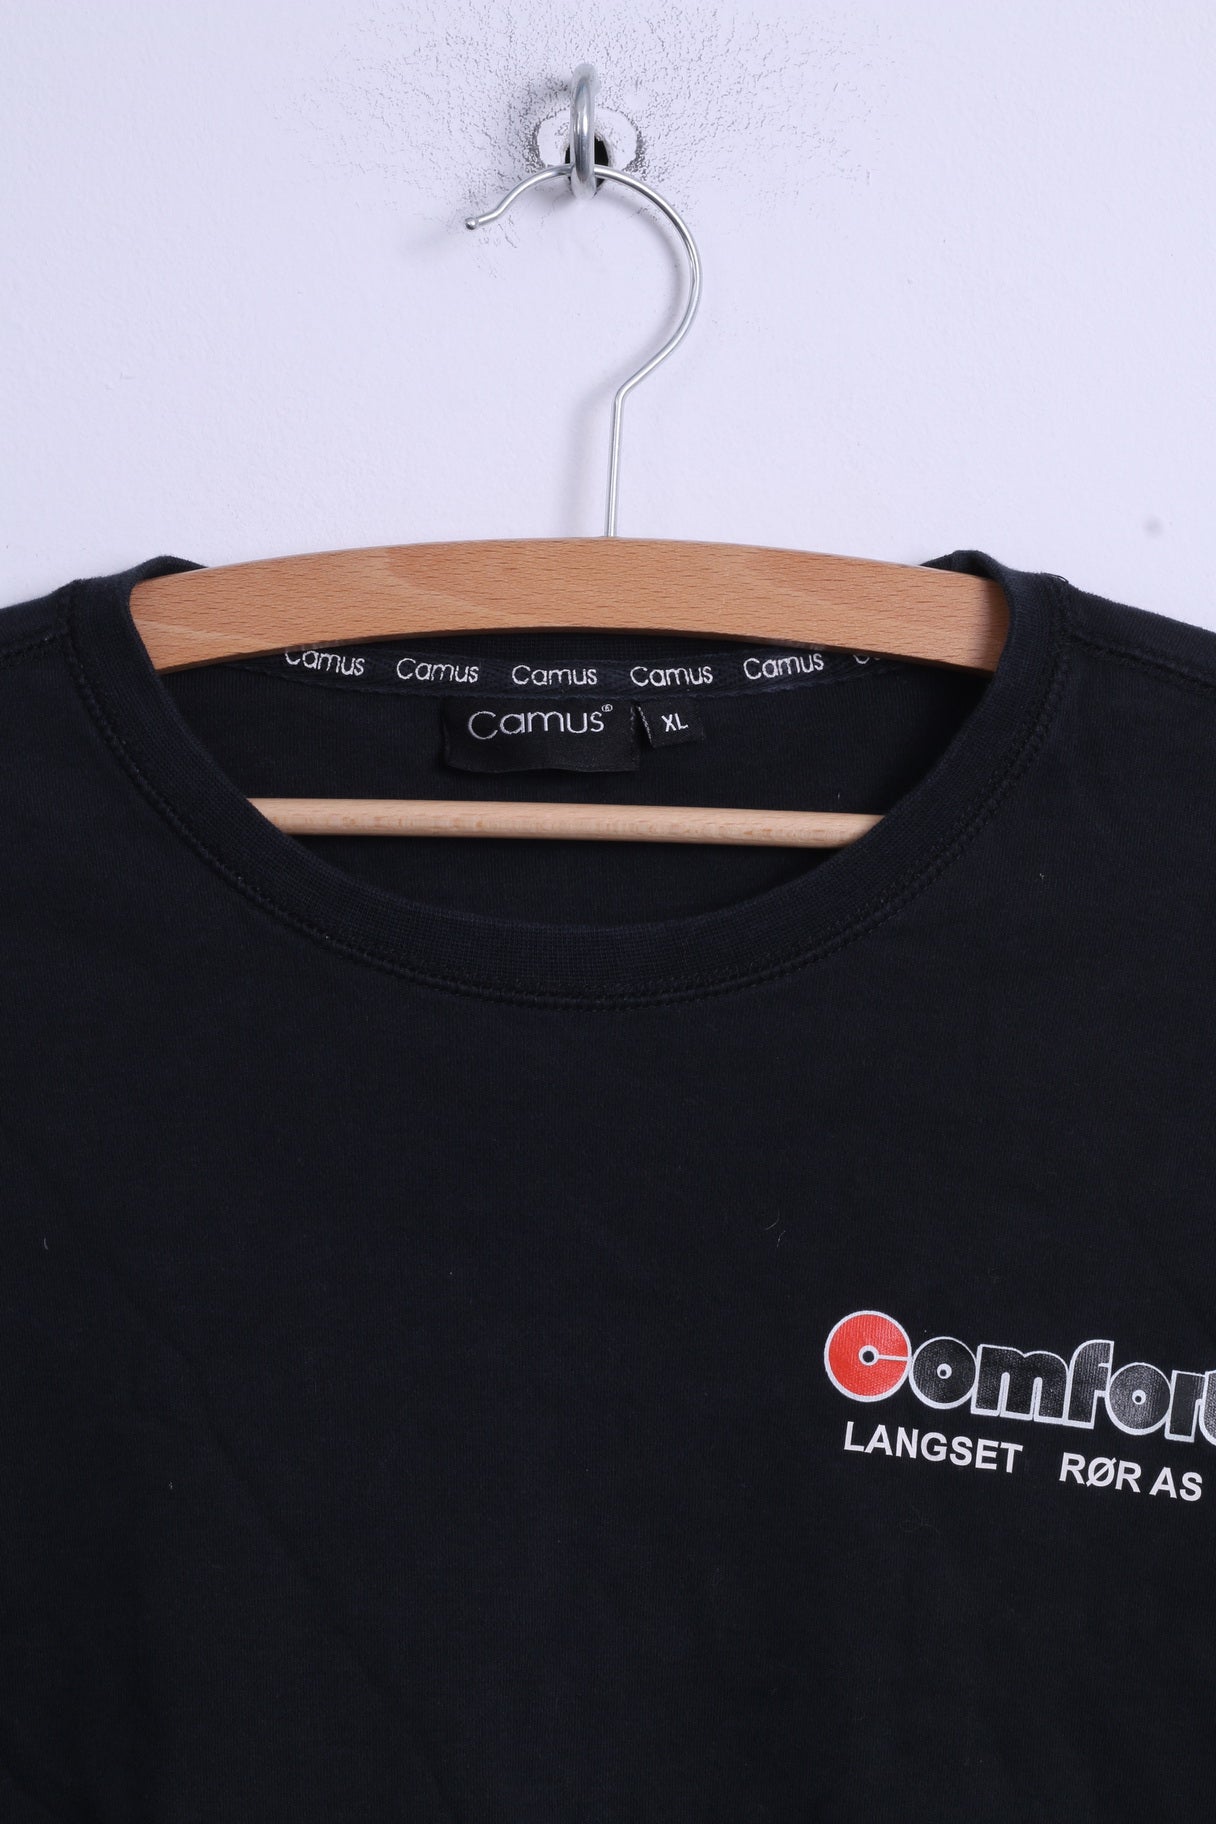 Camus Womens XL Shirt Black Cotton Long Sleeve Comfort Langset